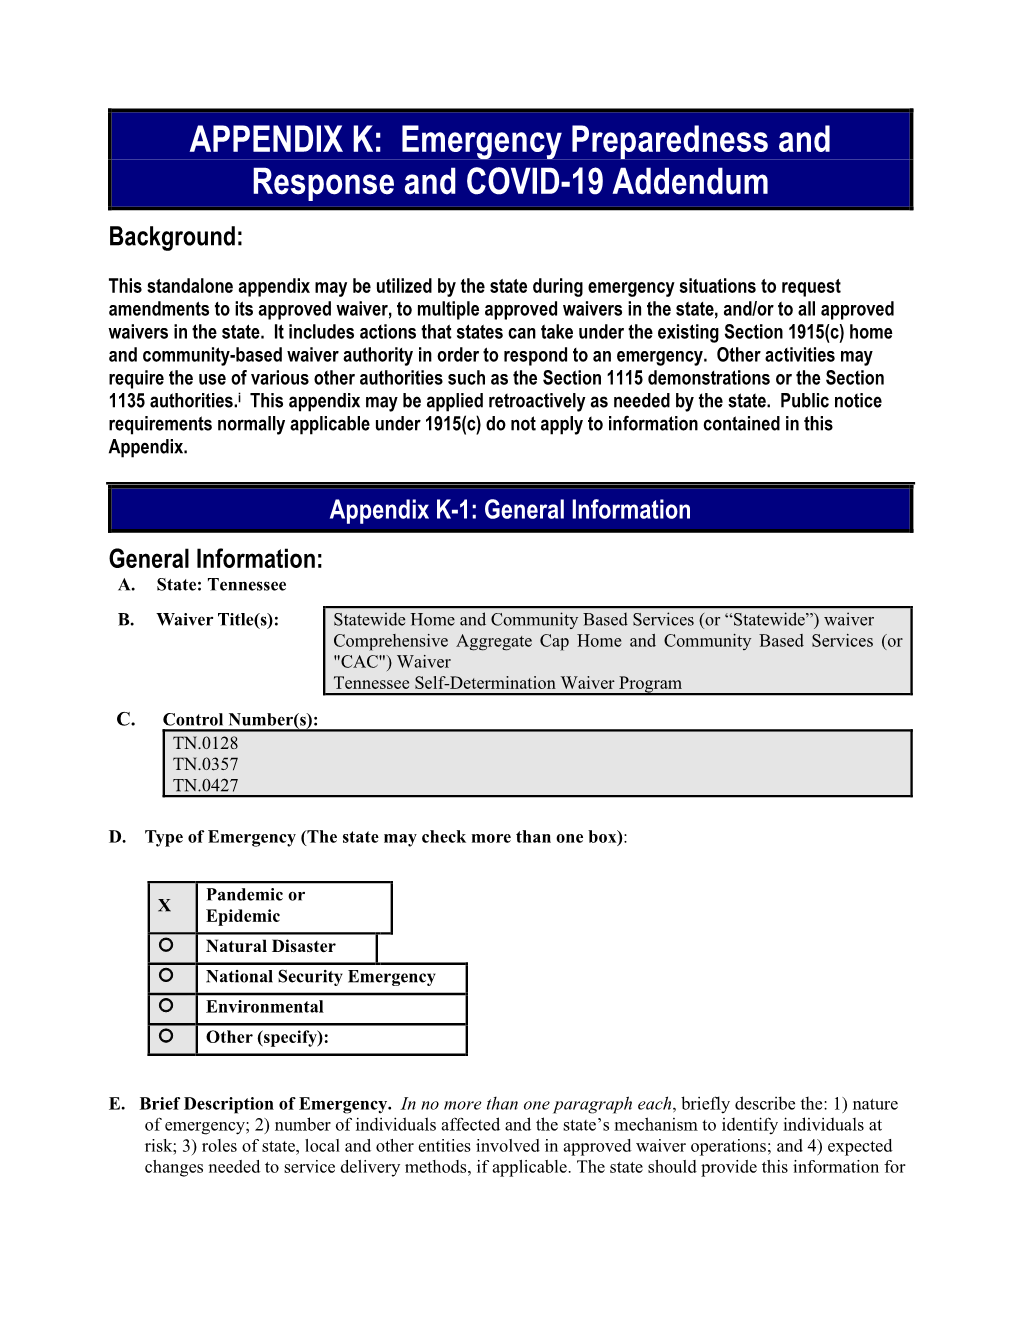 APPENDIX K: Emergency Preparedness and Response and COVID-19 Addendum Background